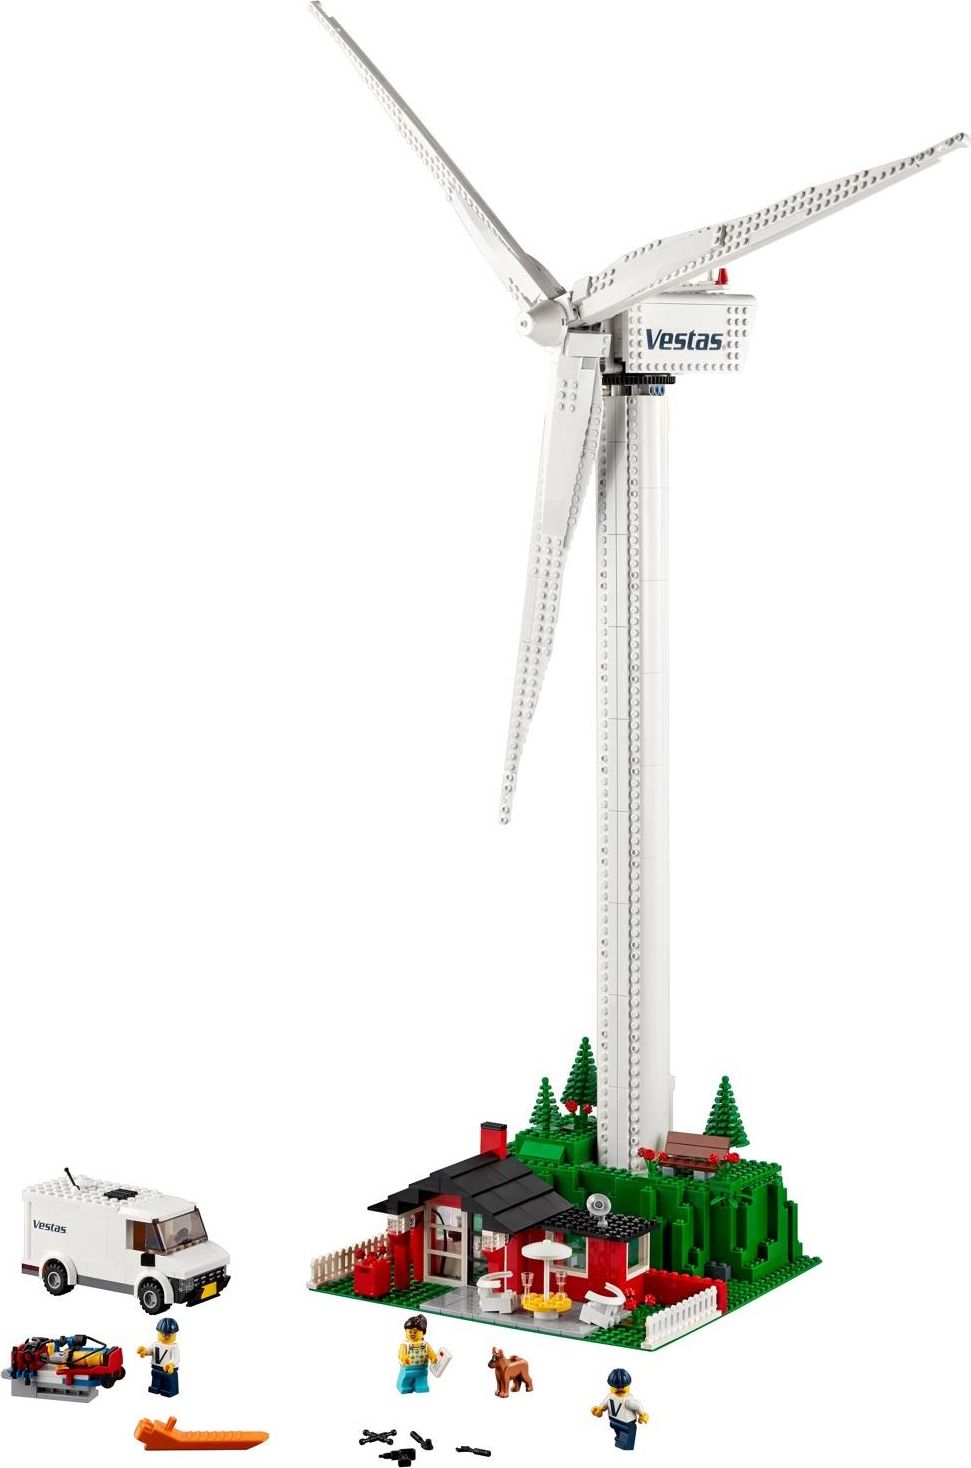 Lego Creator Větrná turbína Vestas - obrázek 1